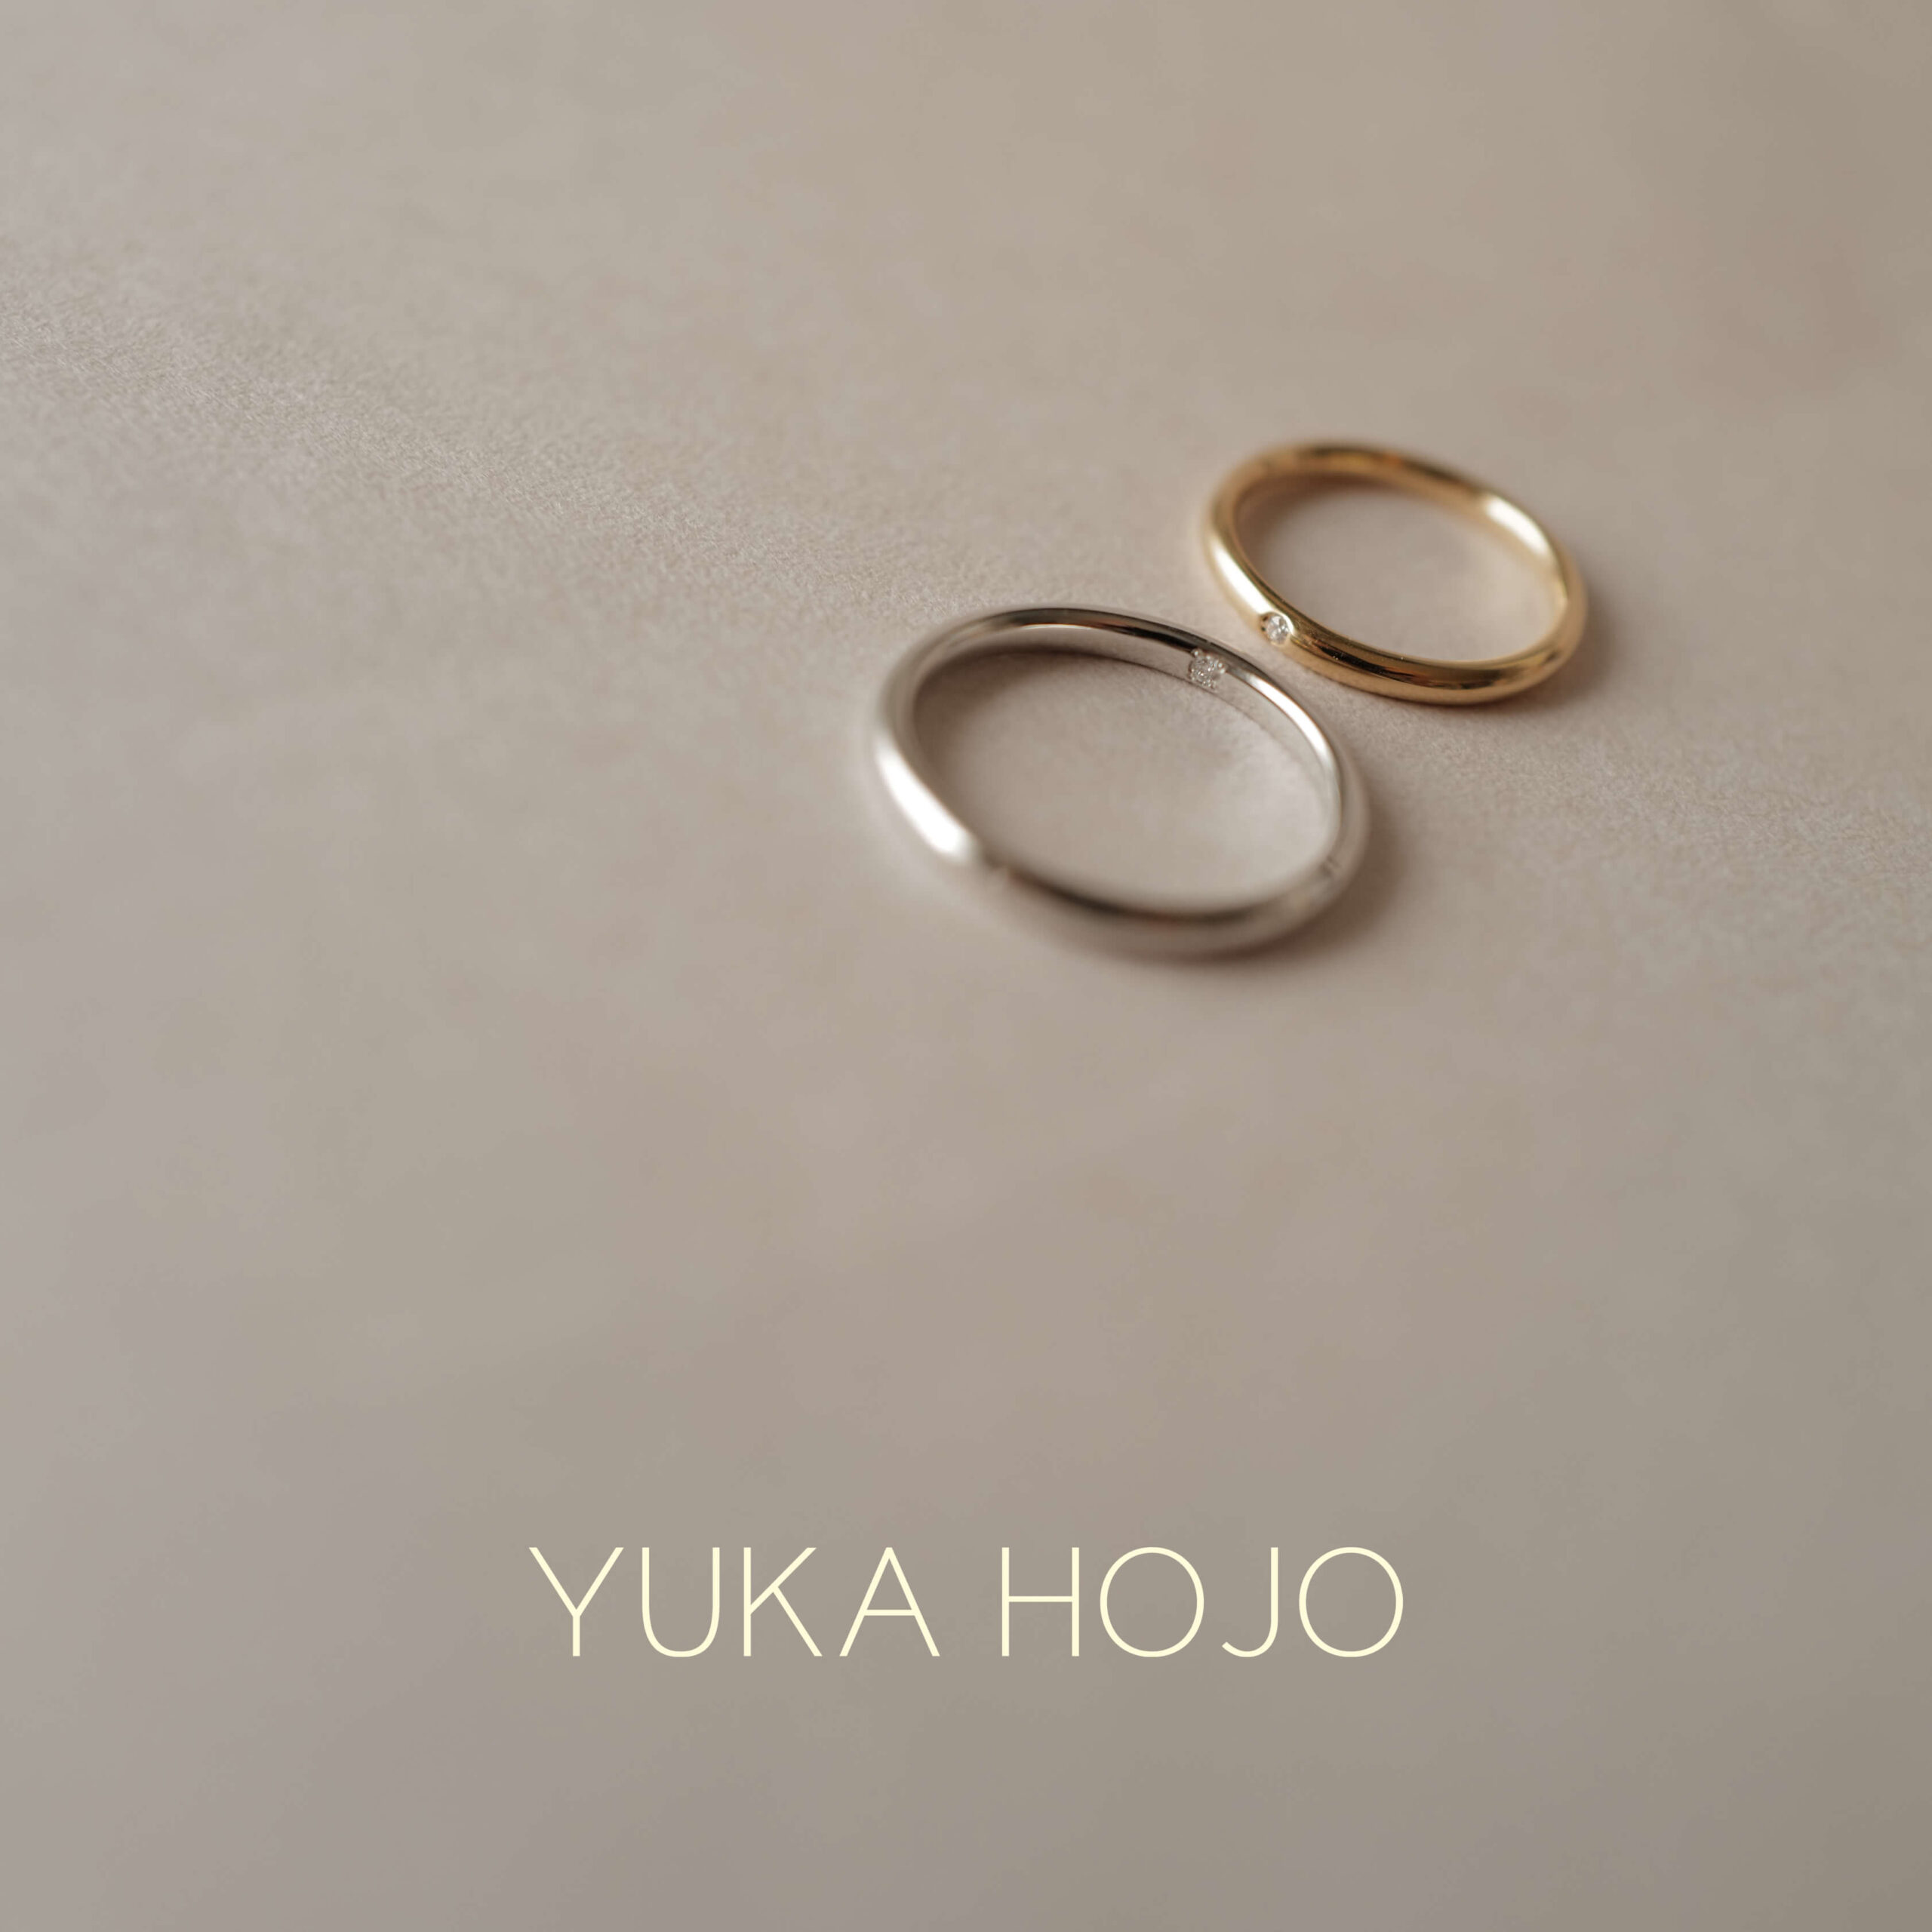 YUKAHOJOユカホウジョウの結婚指輪マリッジリングでツインズダイヤモンドが留められたSoulmatesソウルメイト